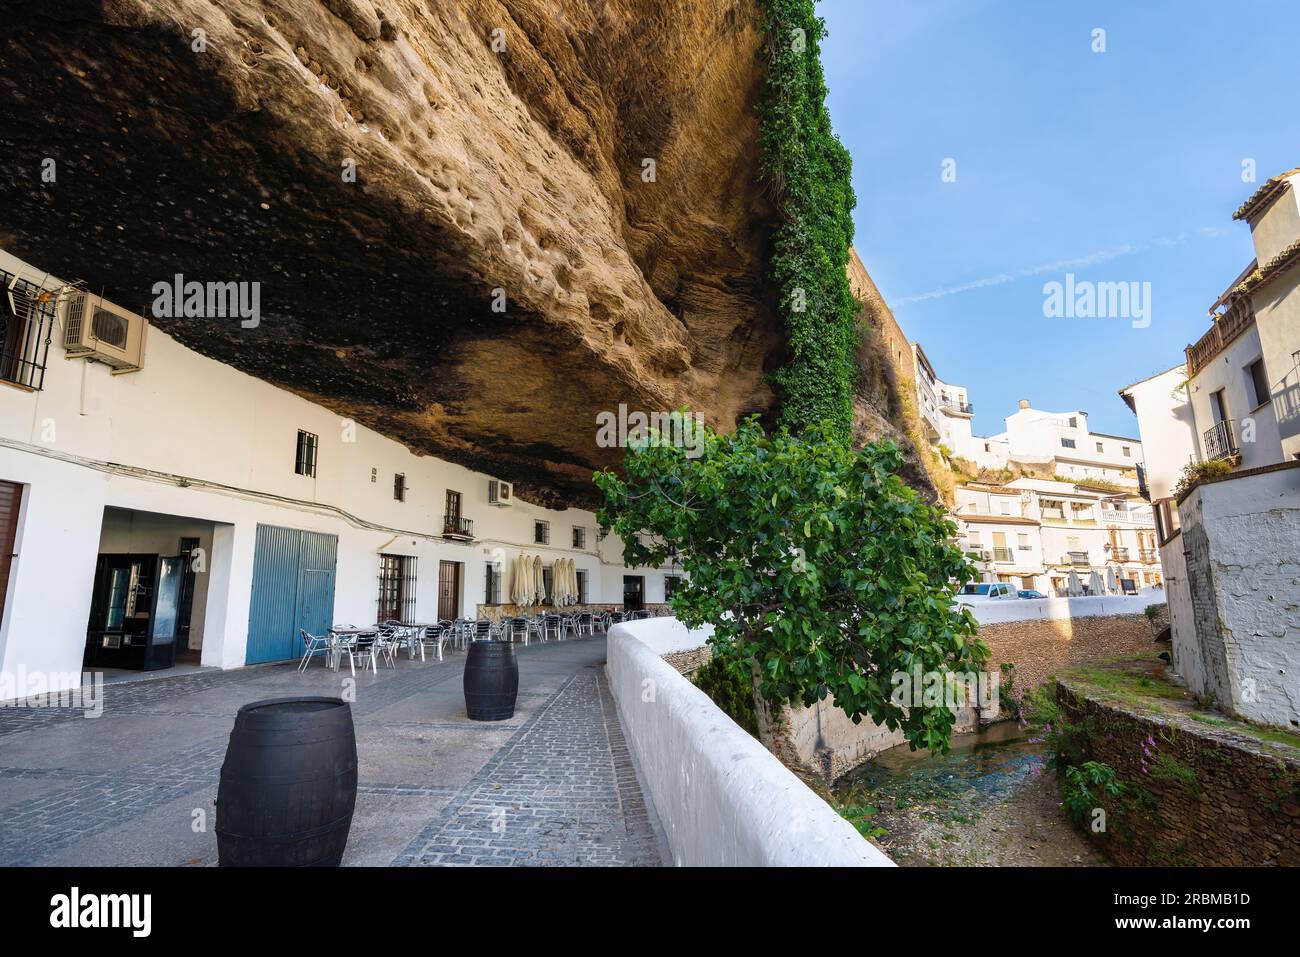 Calle Cuevas del Sol Street with Rocks dwellings and restaurants - Setenil de las Bodegas, Andalusia, Spain Stock Photo